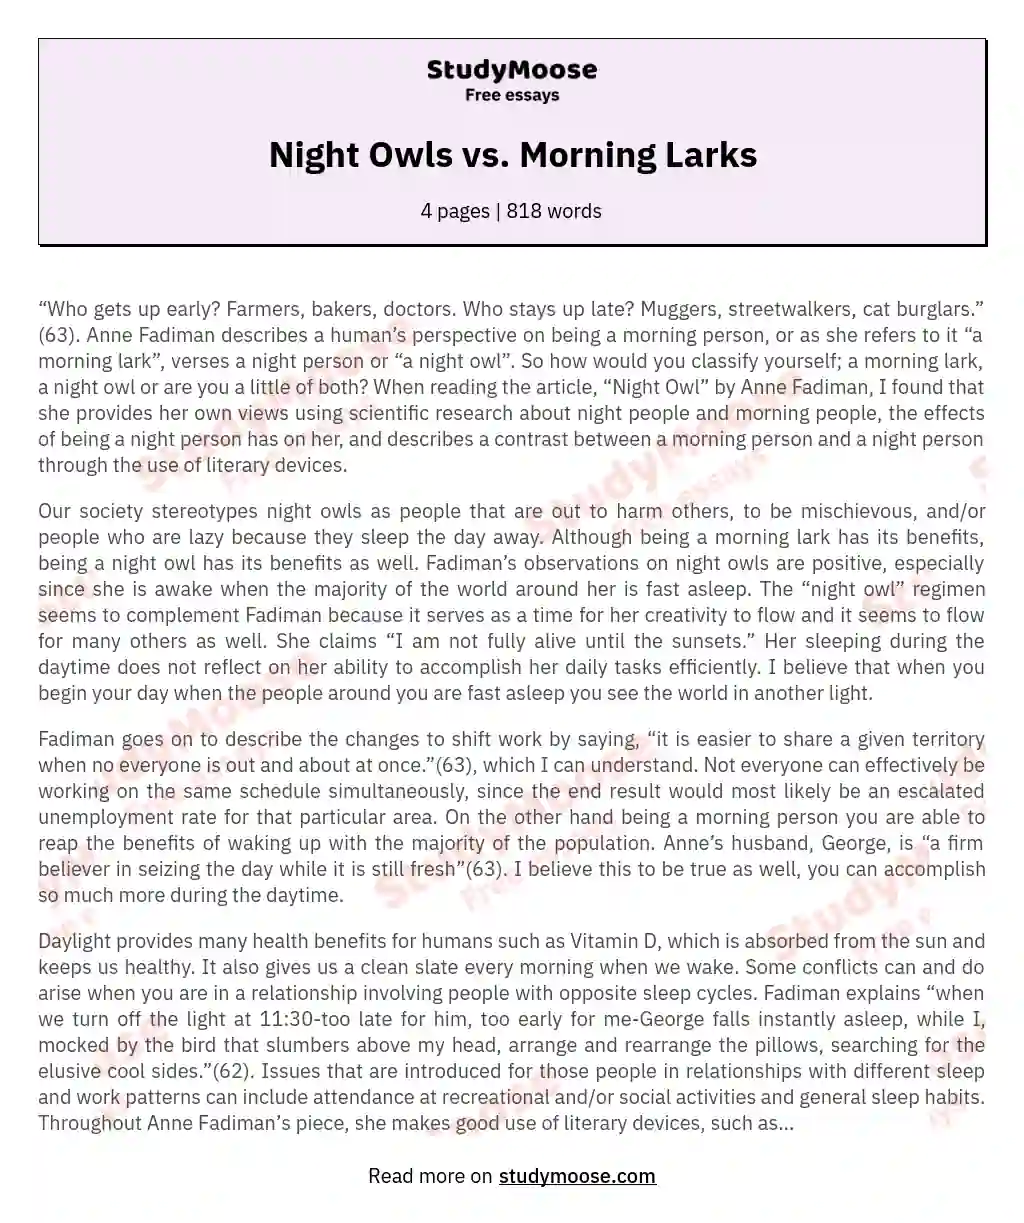 Night Owls vs. Morning Larks